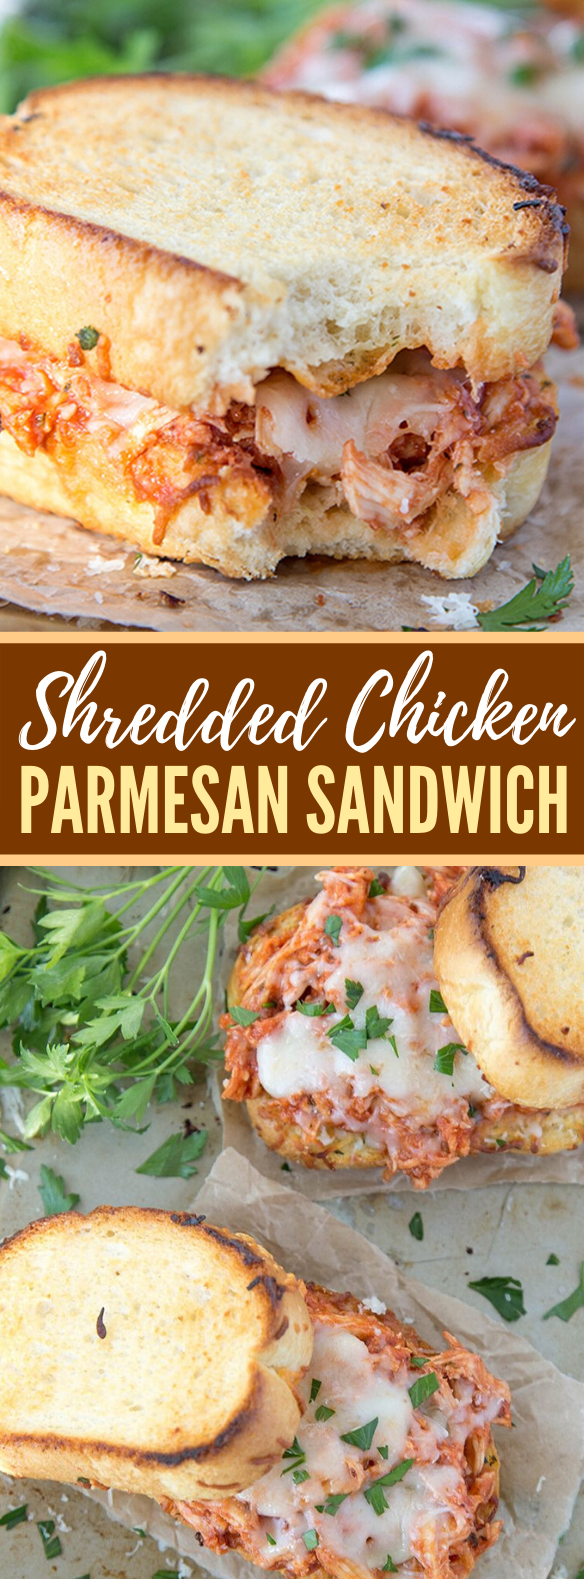 SHREDDED CHICKEN PARMESAN SANDWICH #weeknightdinner #lunch